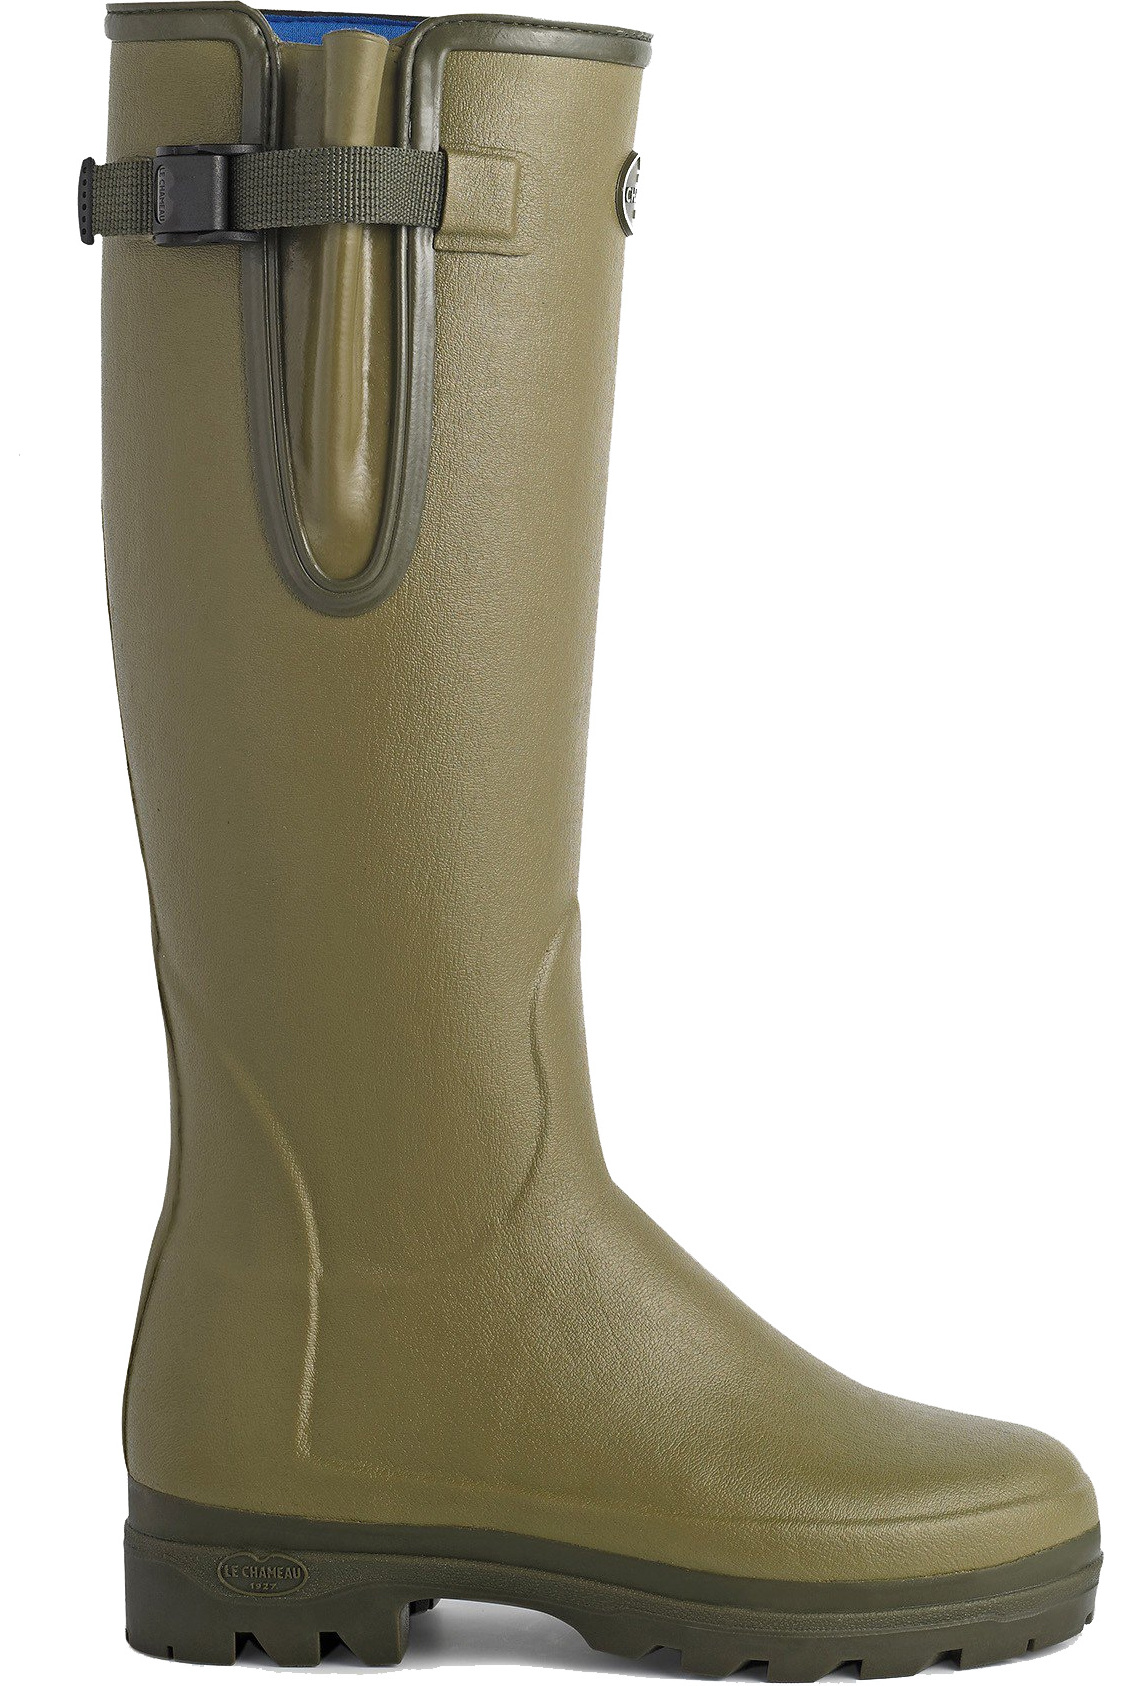 Le Chameau botas de goma Vierzon en verde tamaños de 39 a 51 